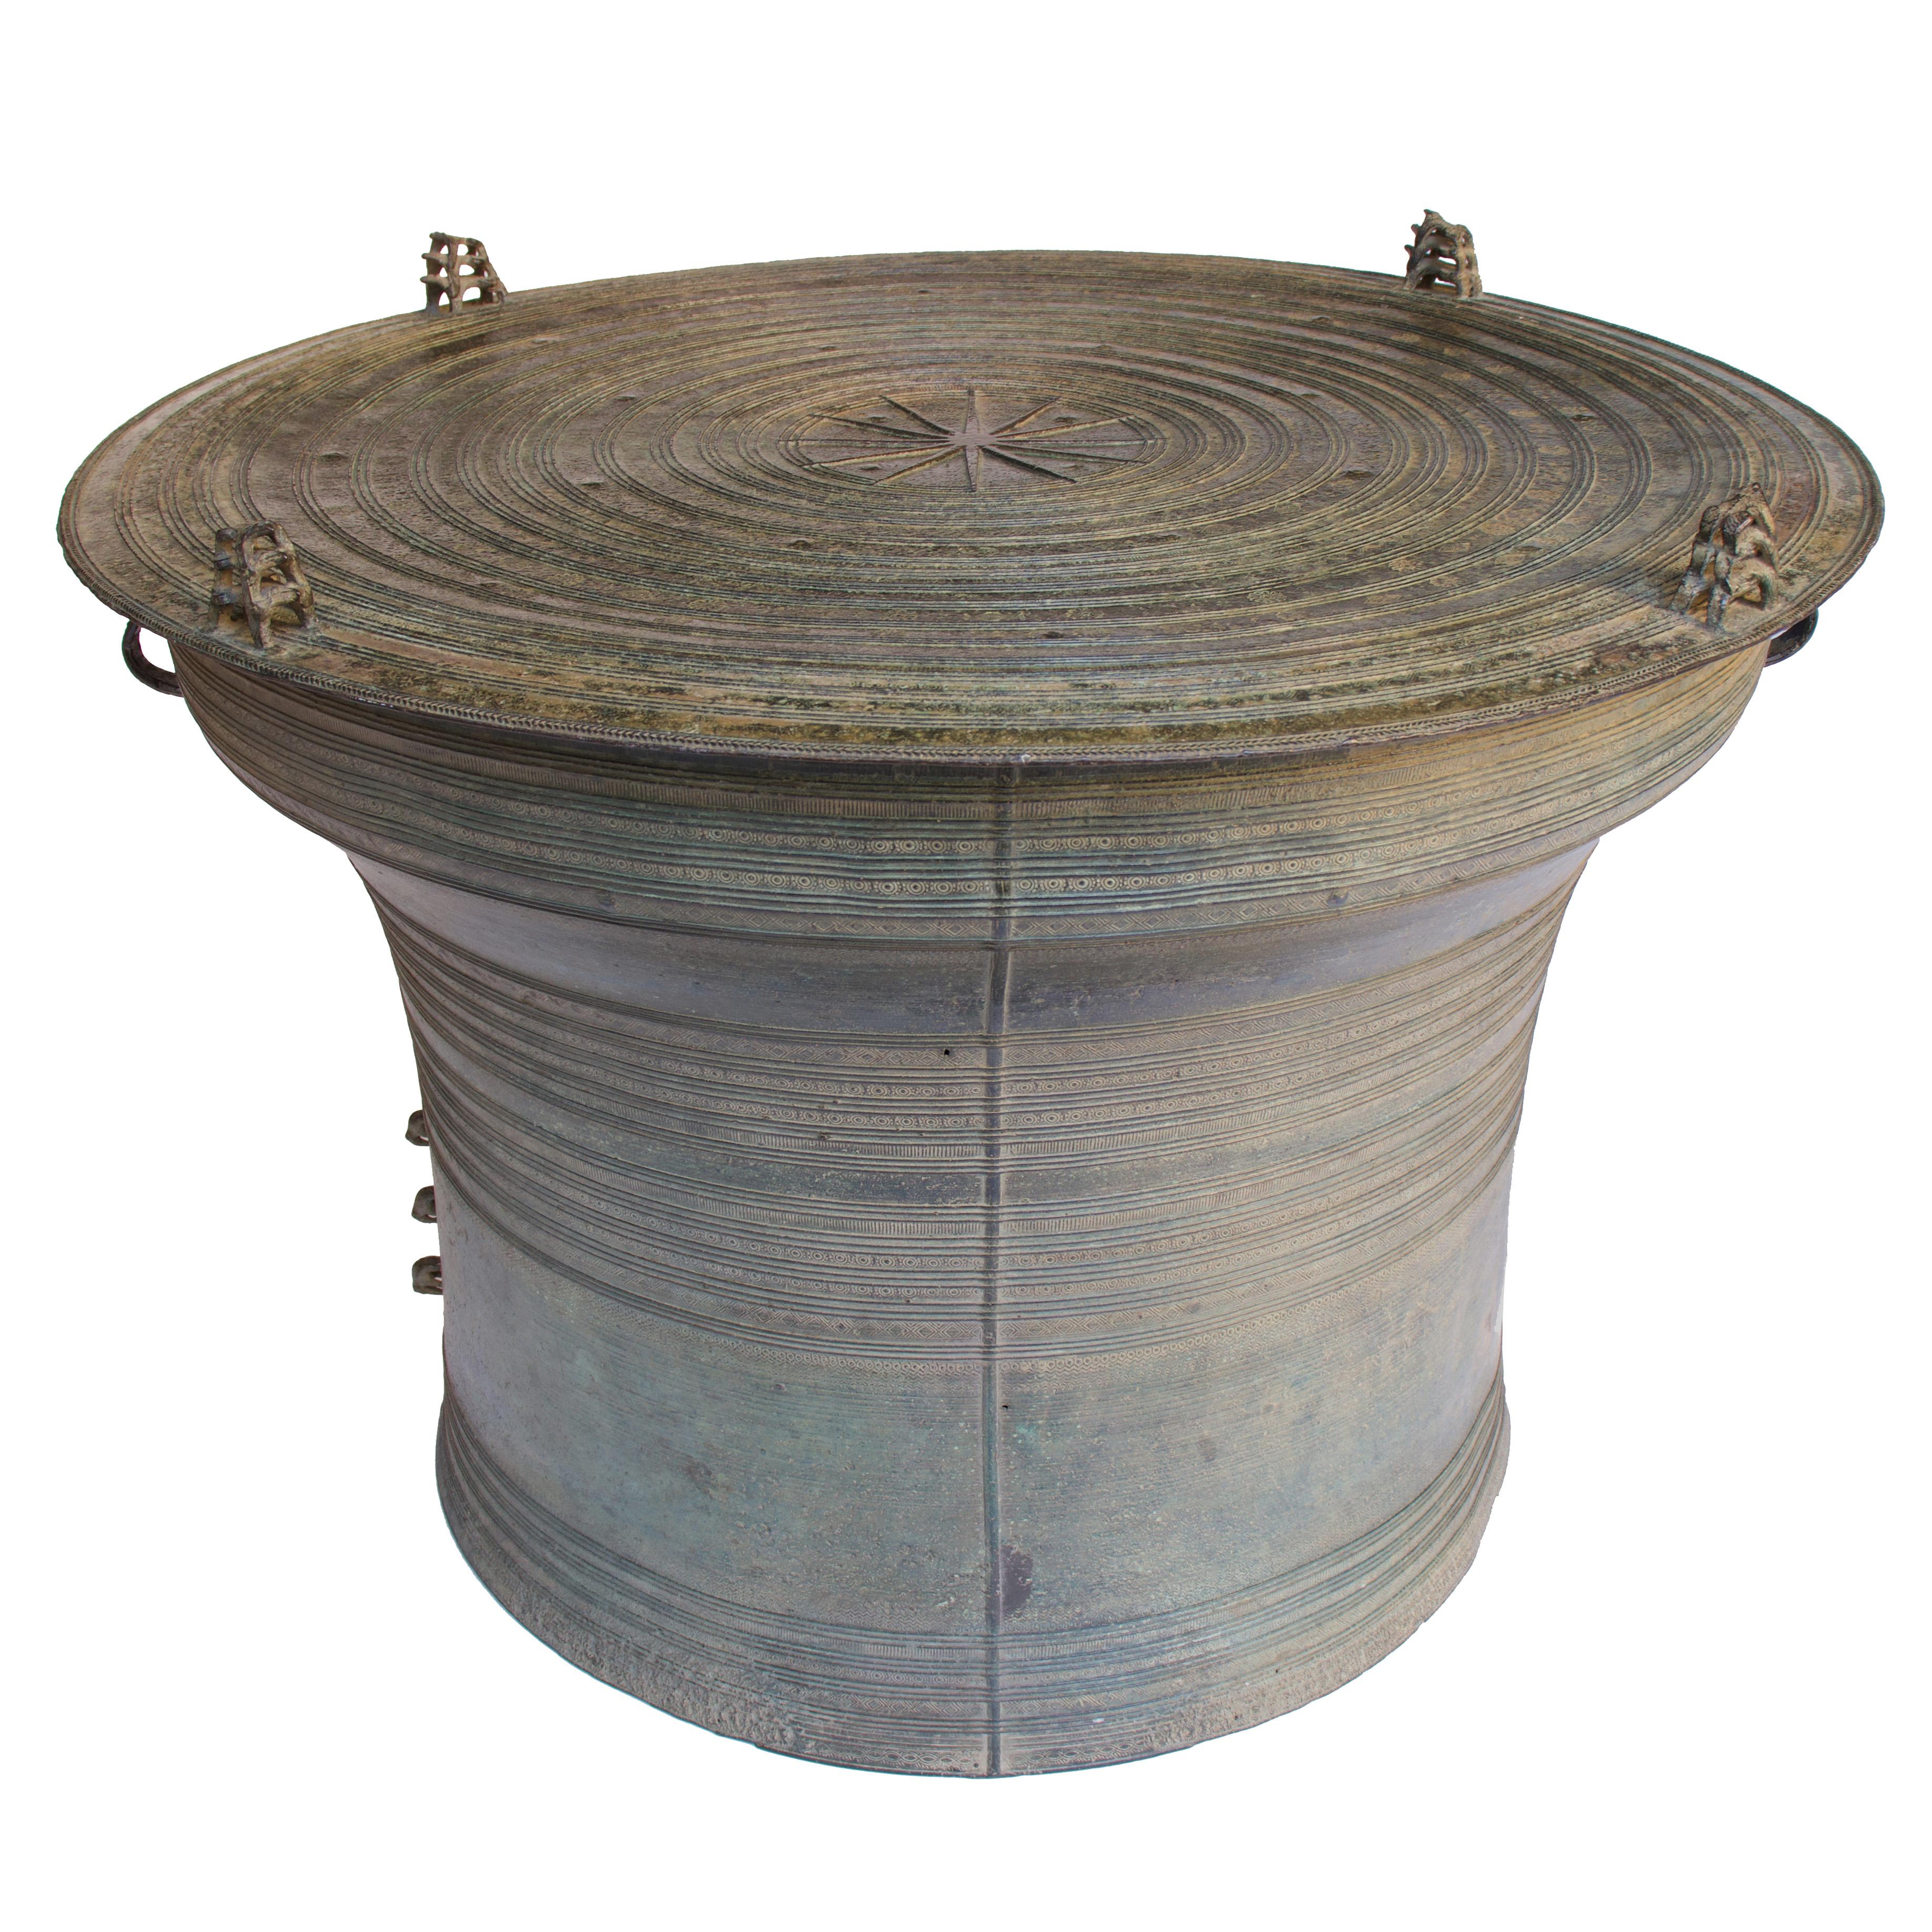 Un grand tambour de bronze (Heger Type III), Pazi (Birman), pam klo' (Karen) également connu sous le nom de 